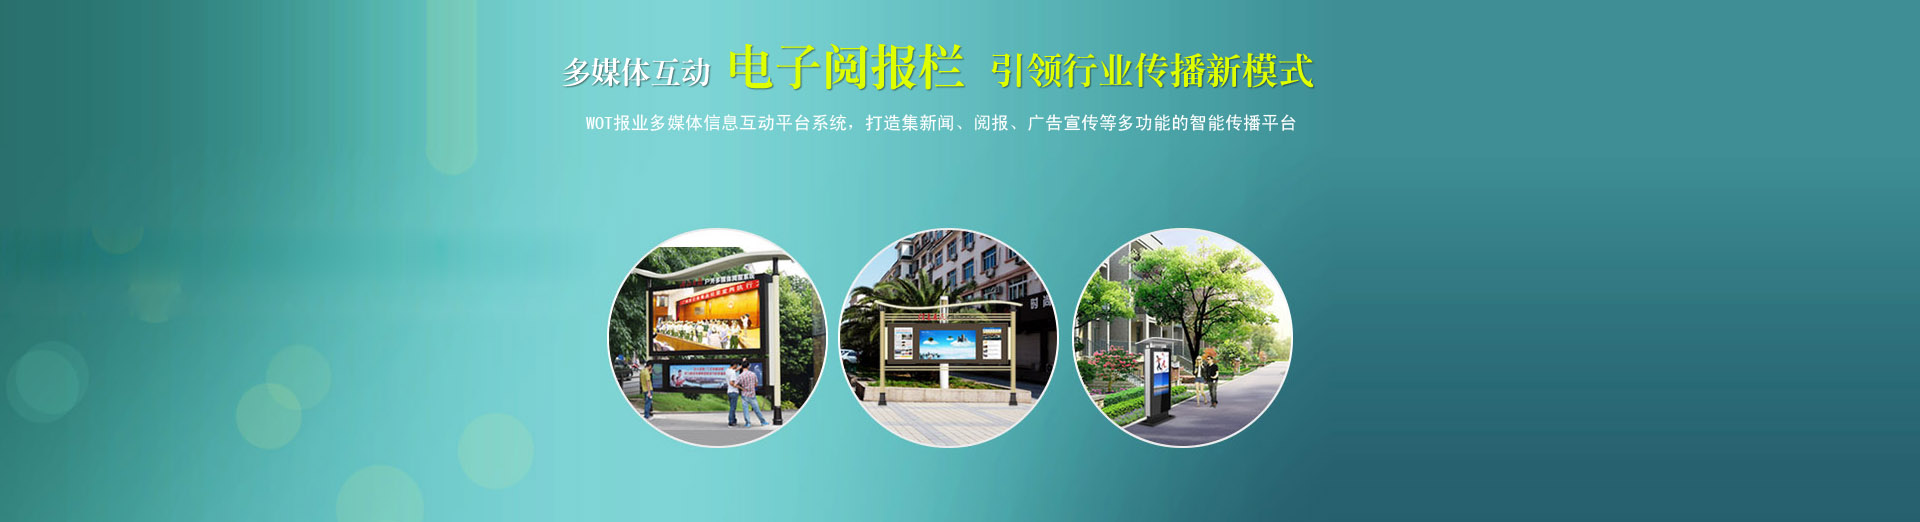 Shenzhen Lwxing Technology Co.,Ltd